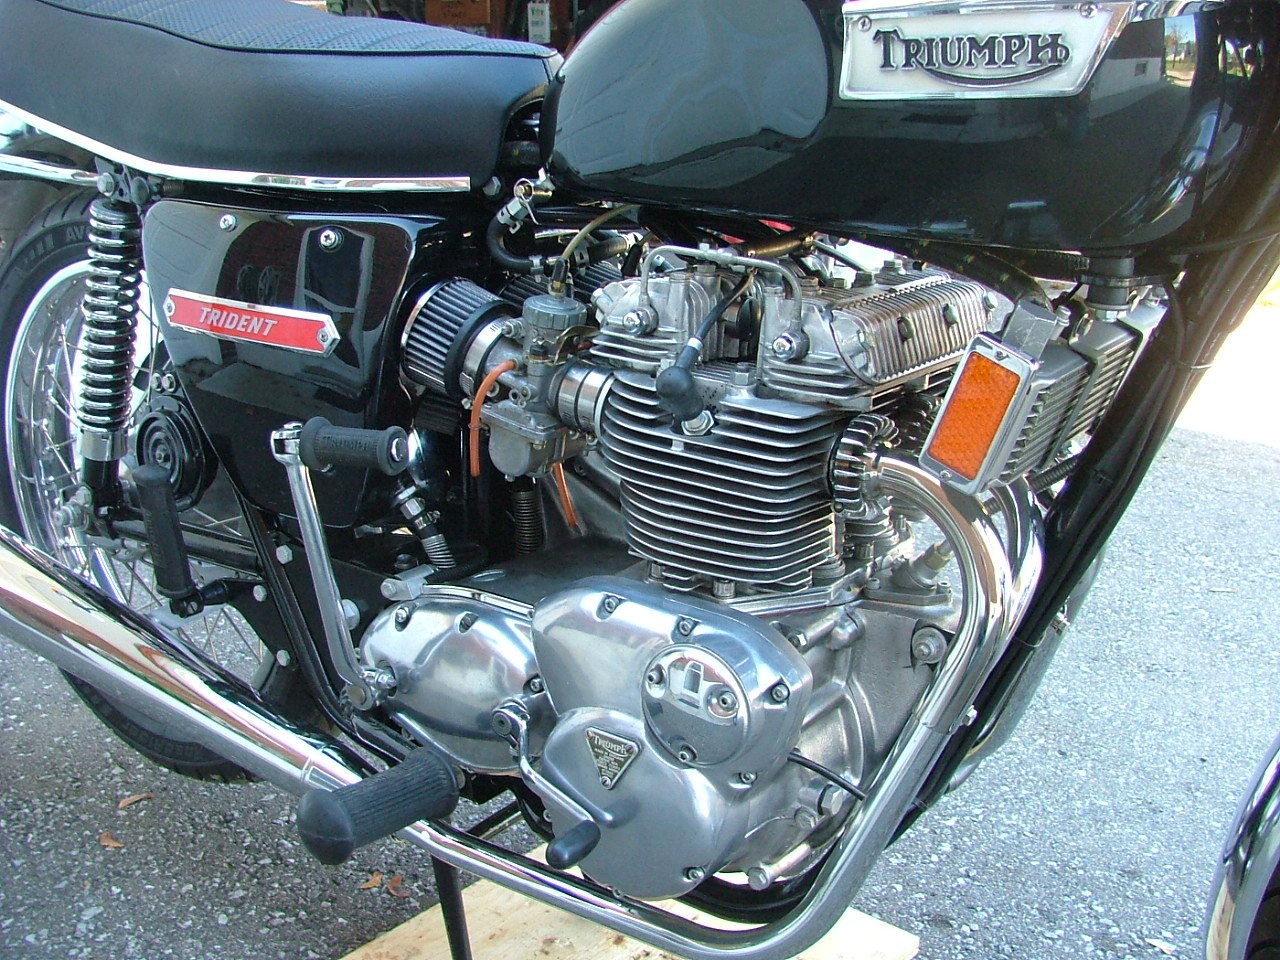 Triumph Trident - 1973